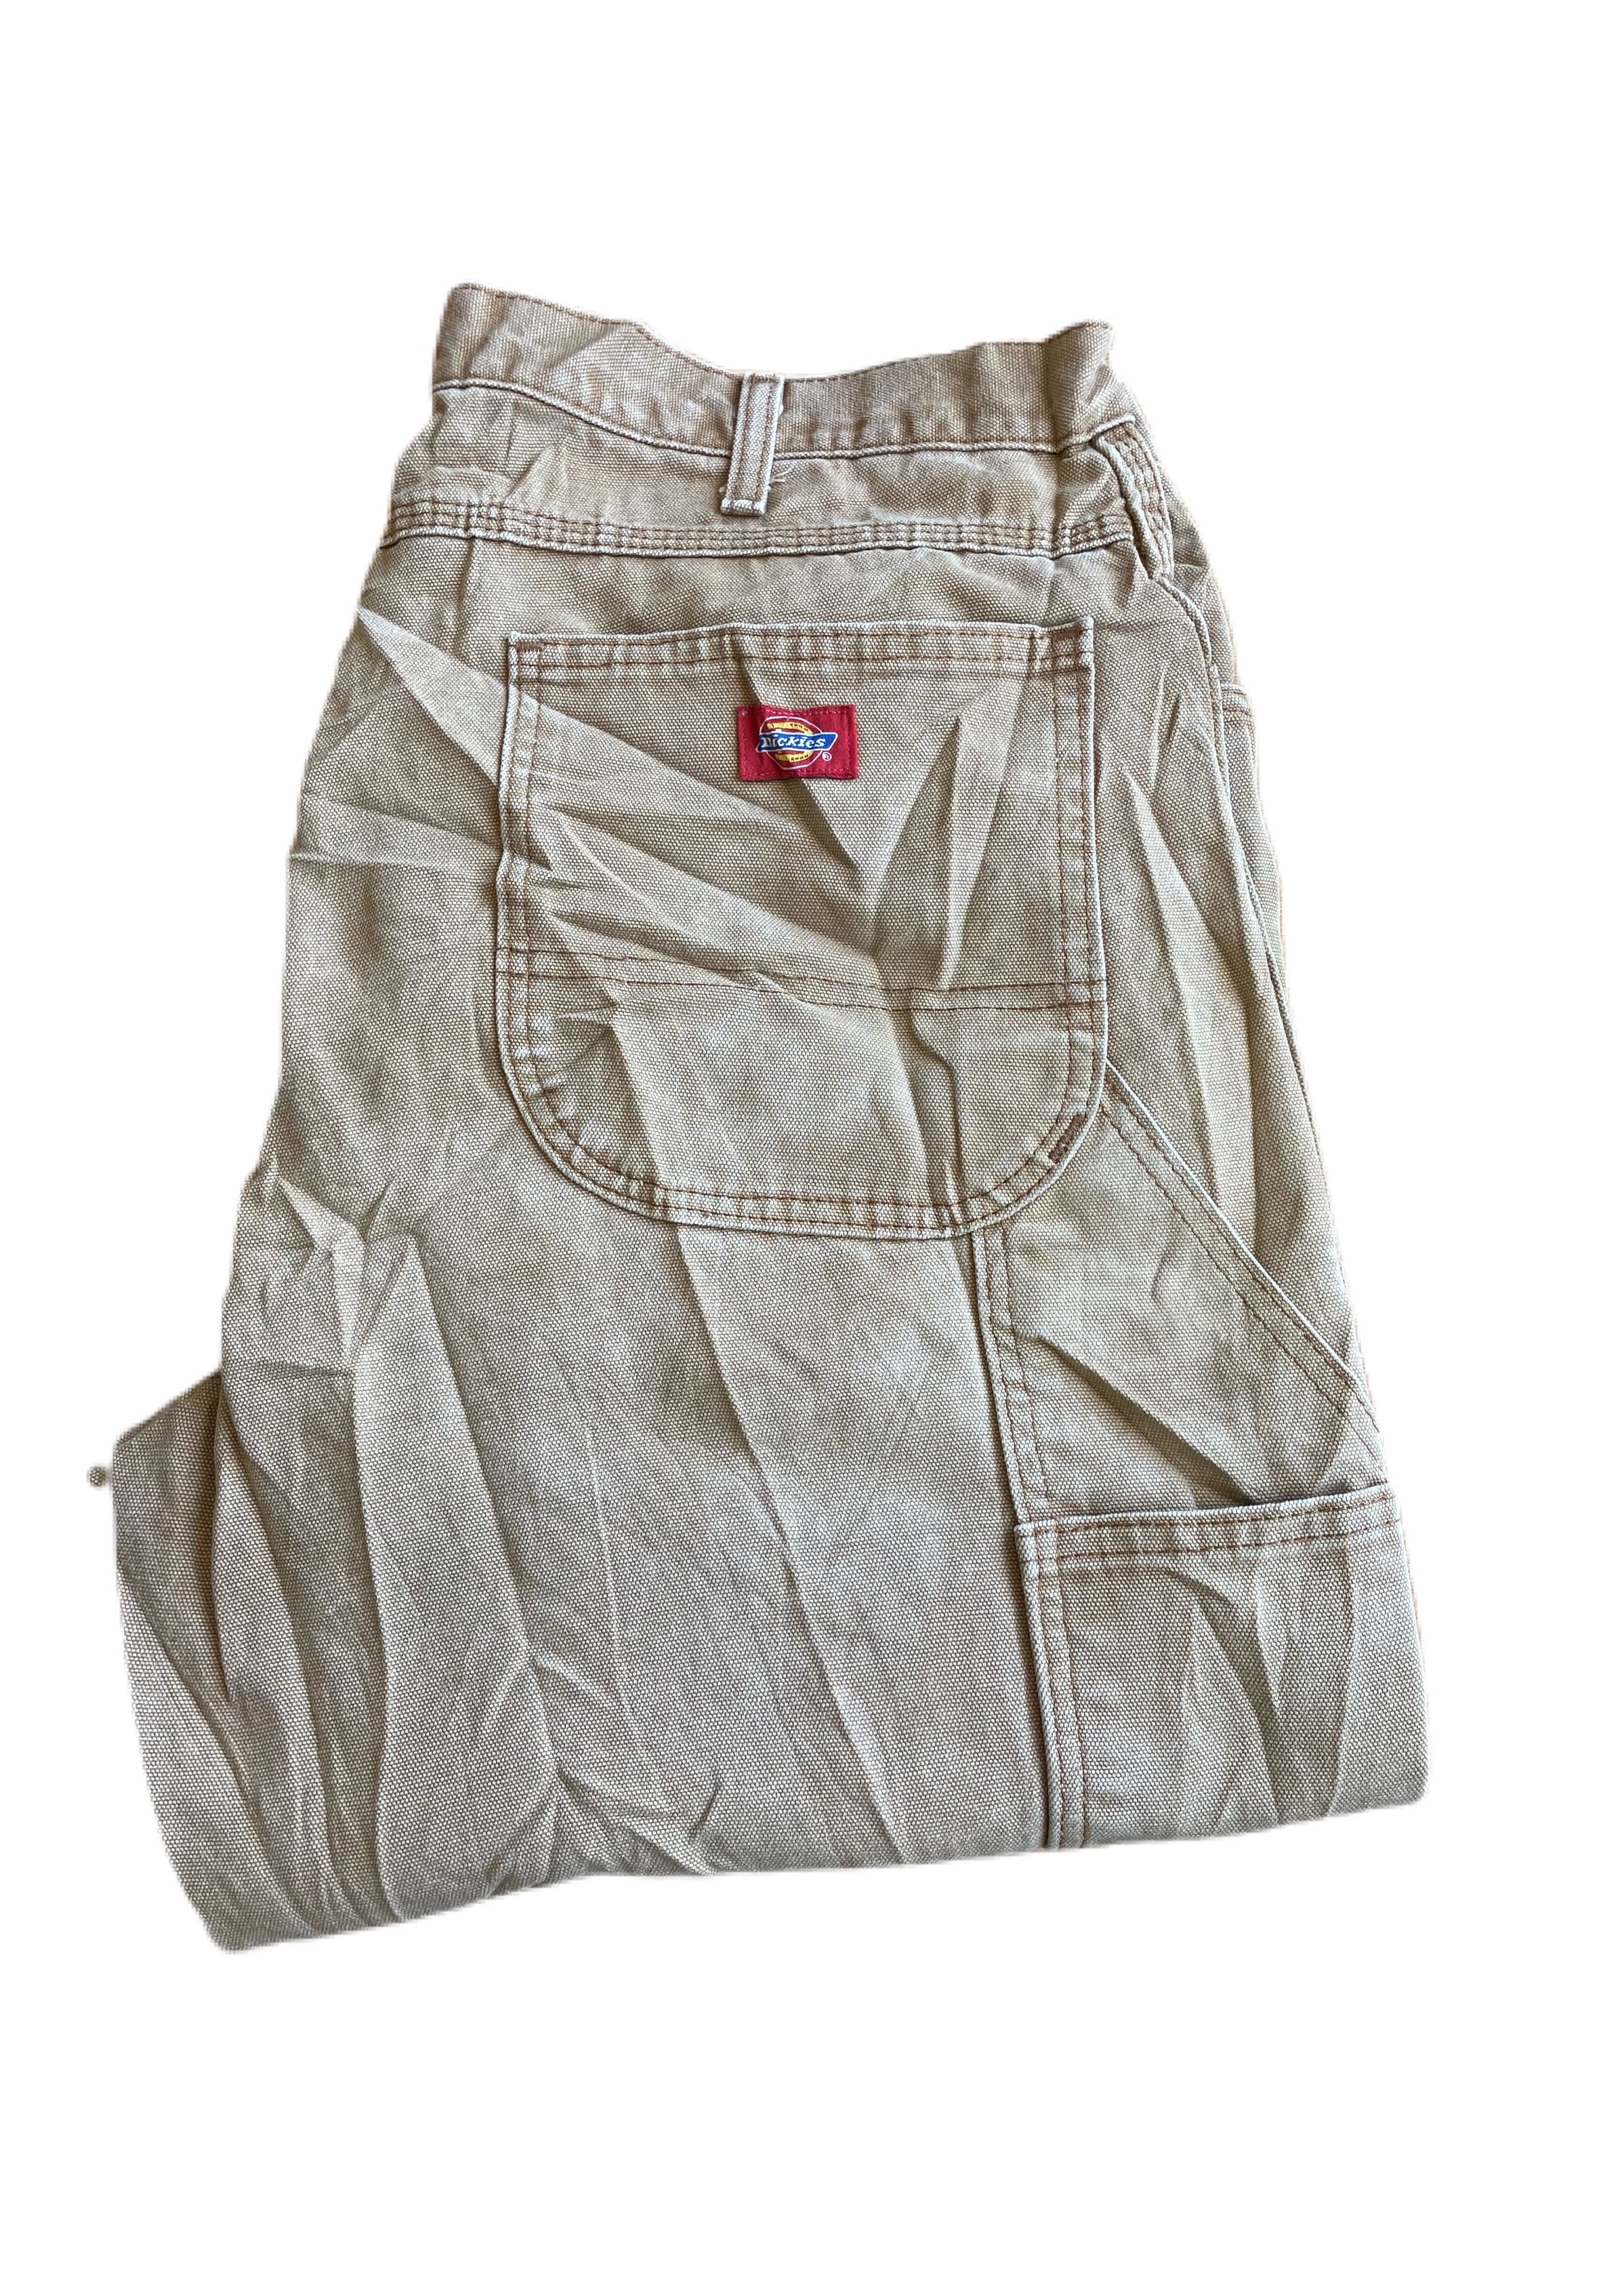 Fireproof Wholesale 100 Cotton Work Cargo Pants